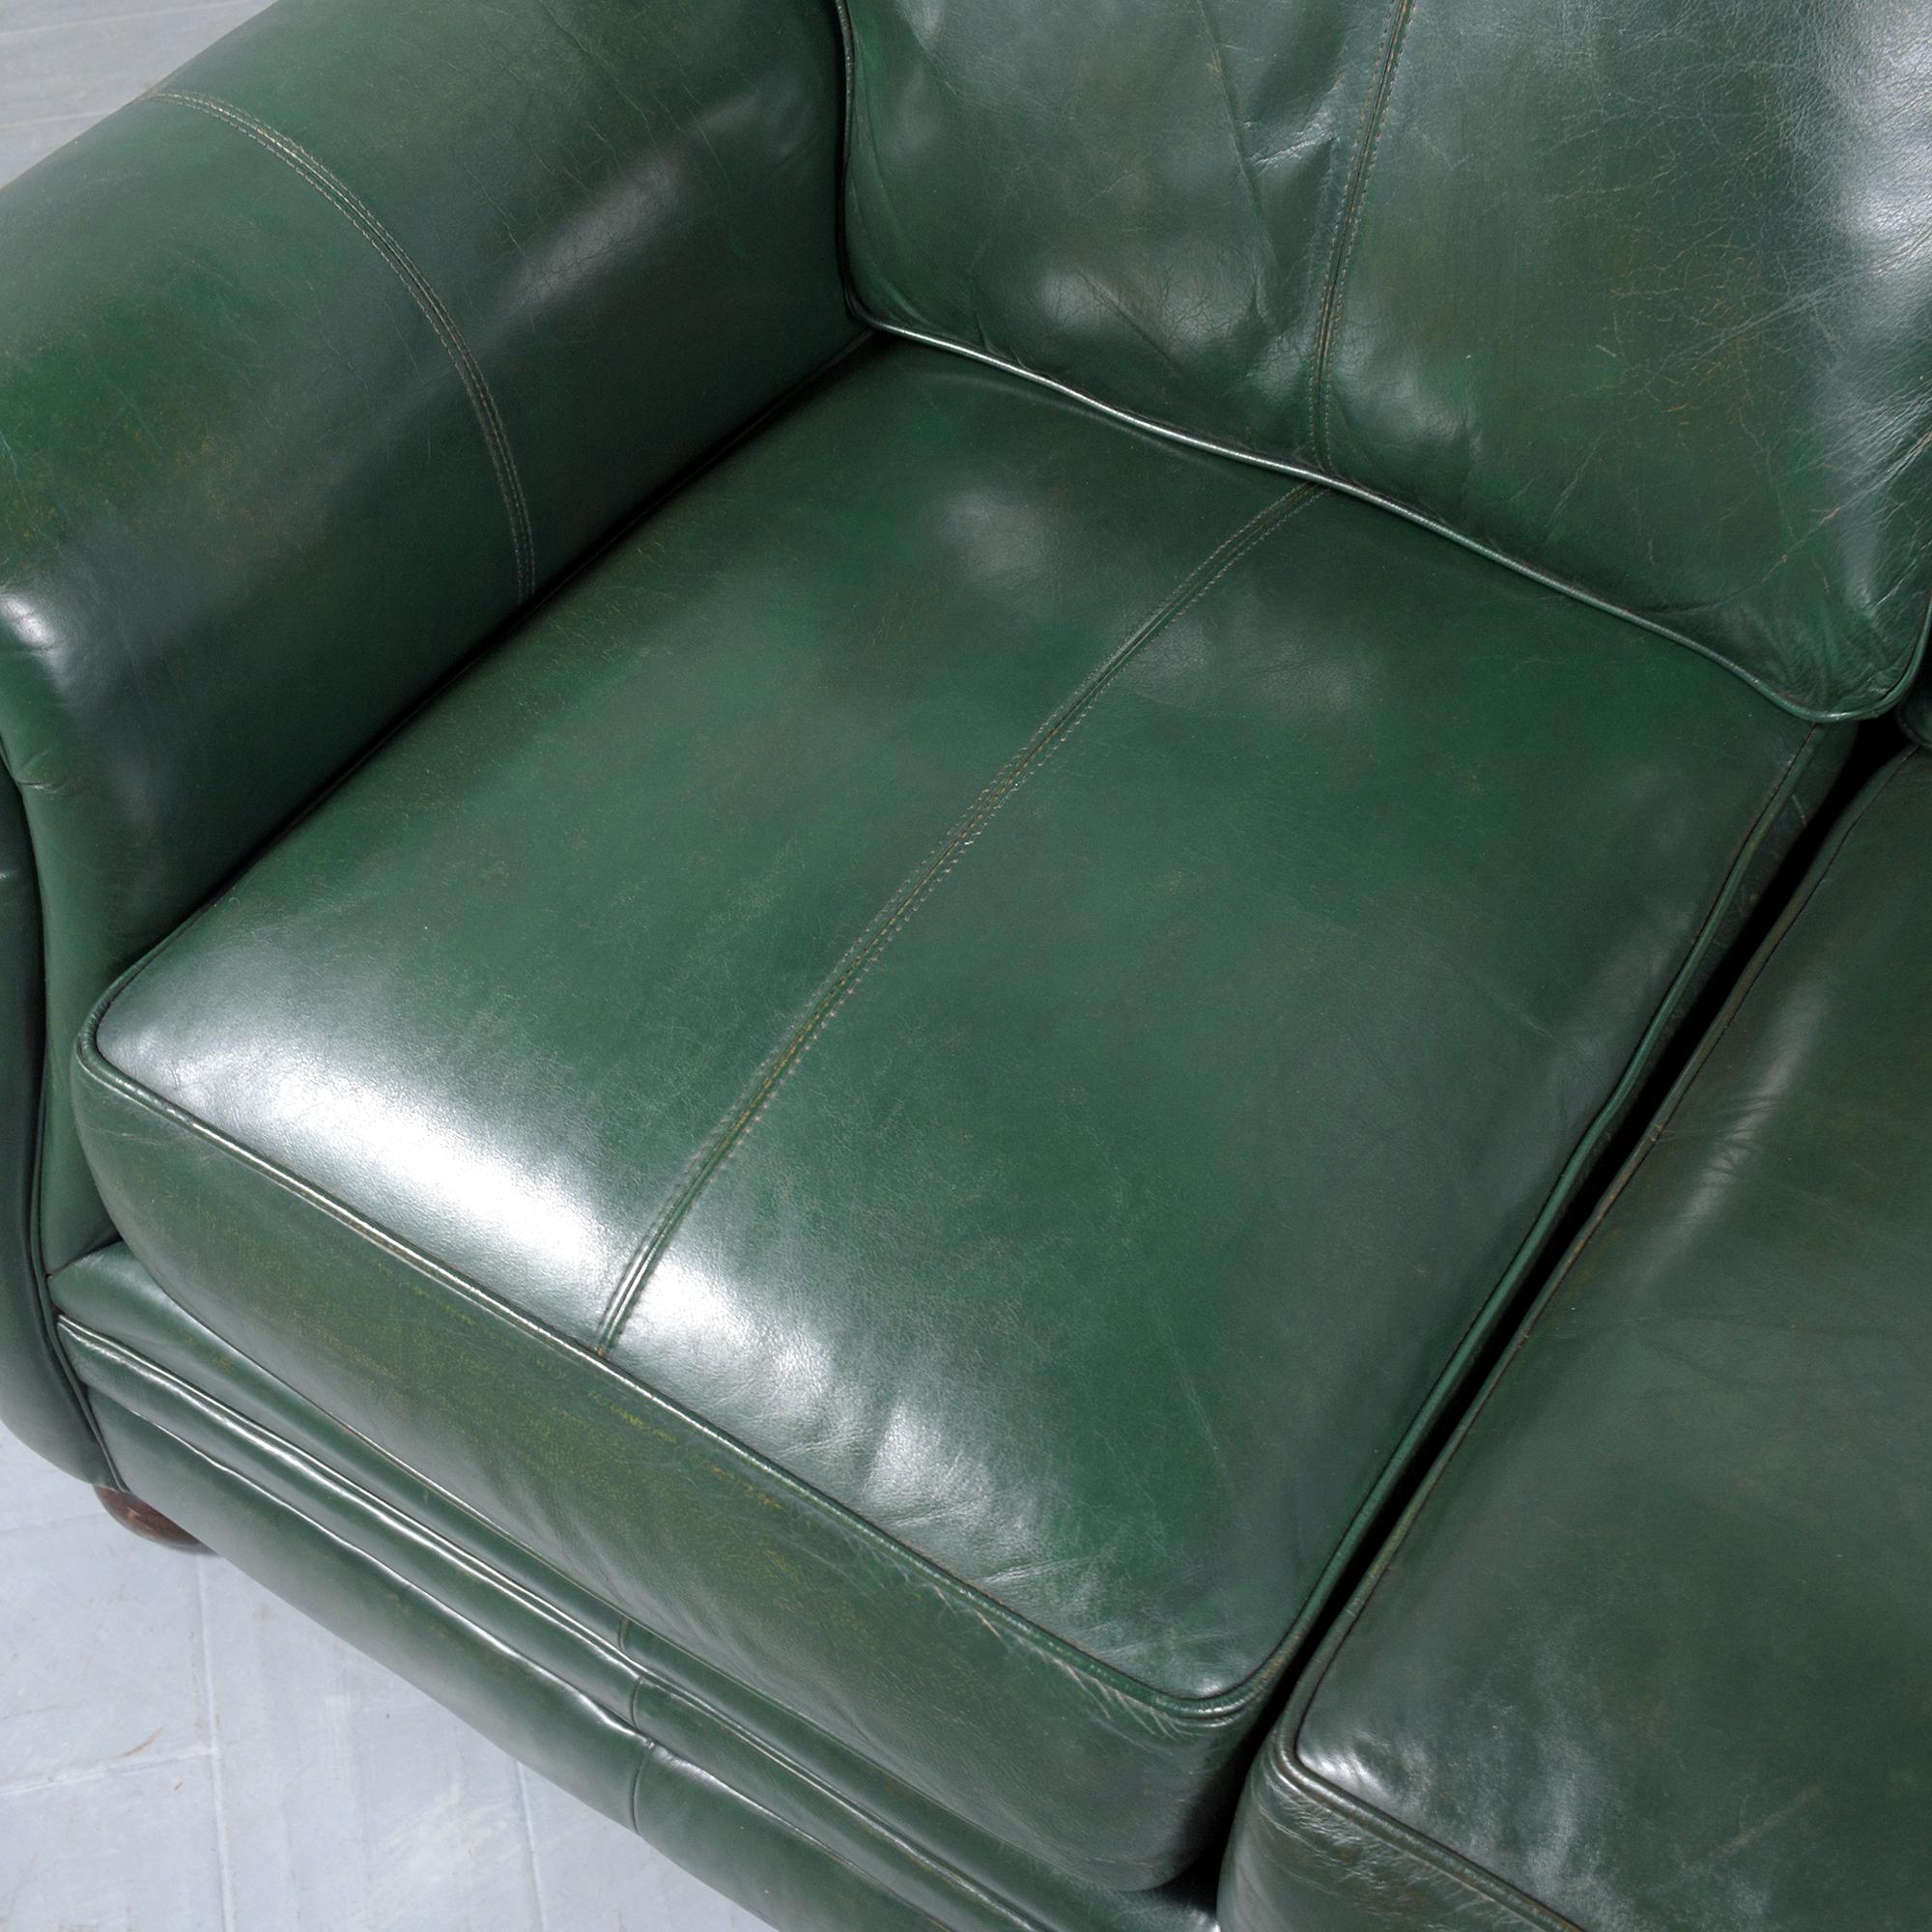 Elegant 1980s Restored Leather Sofa: A Blend of Vintage and Modern For Sale 4